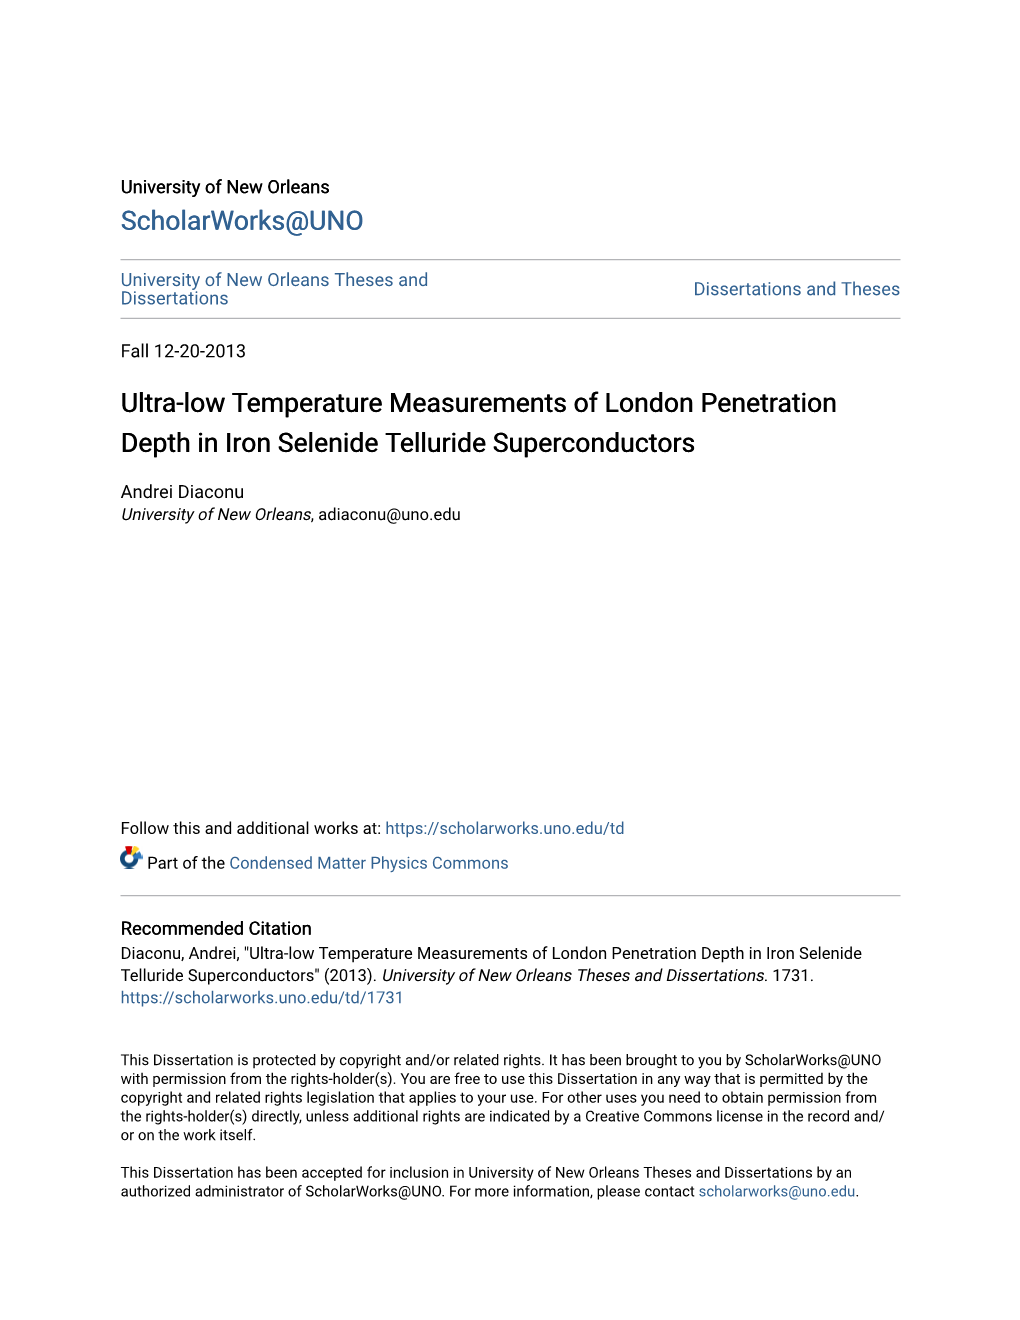 Ultra-Low Temperature Measurements of London Penetration Depth in Iron Selenide Telluride Superconductors